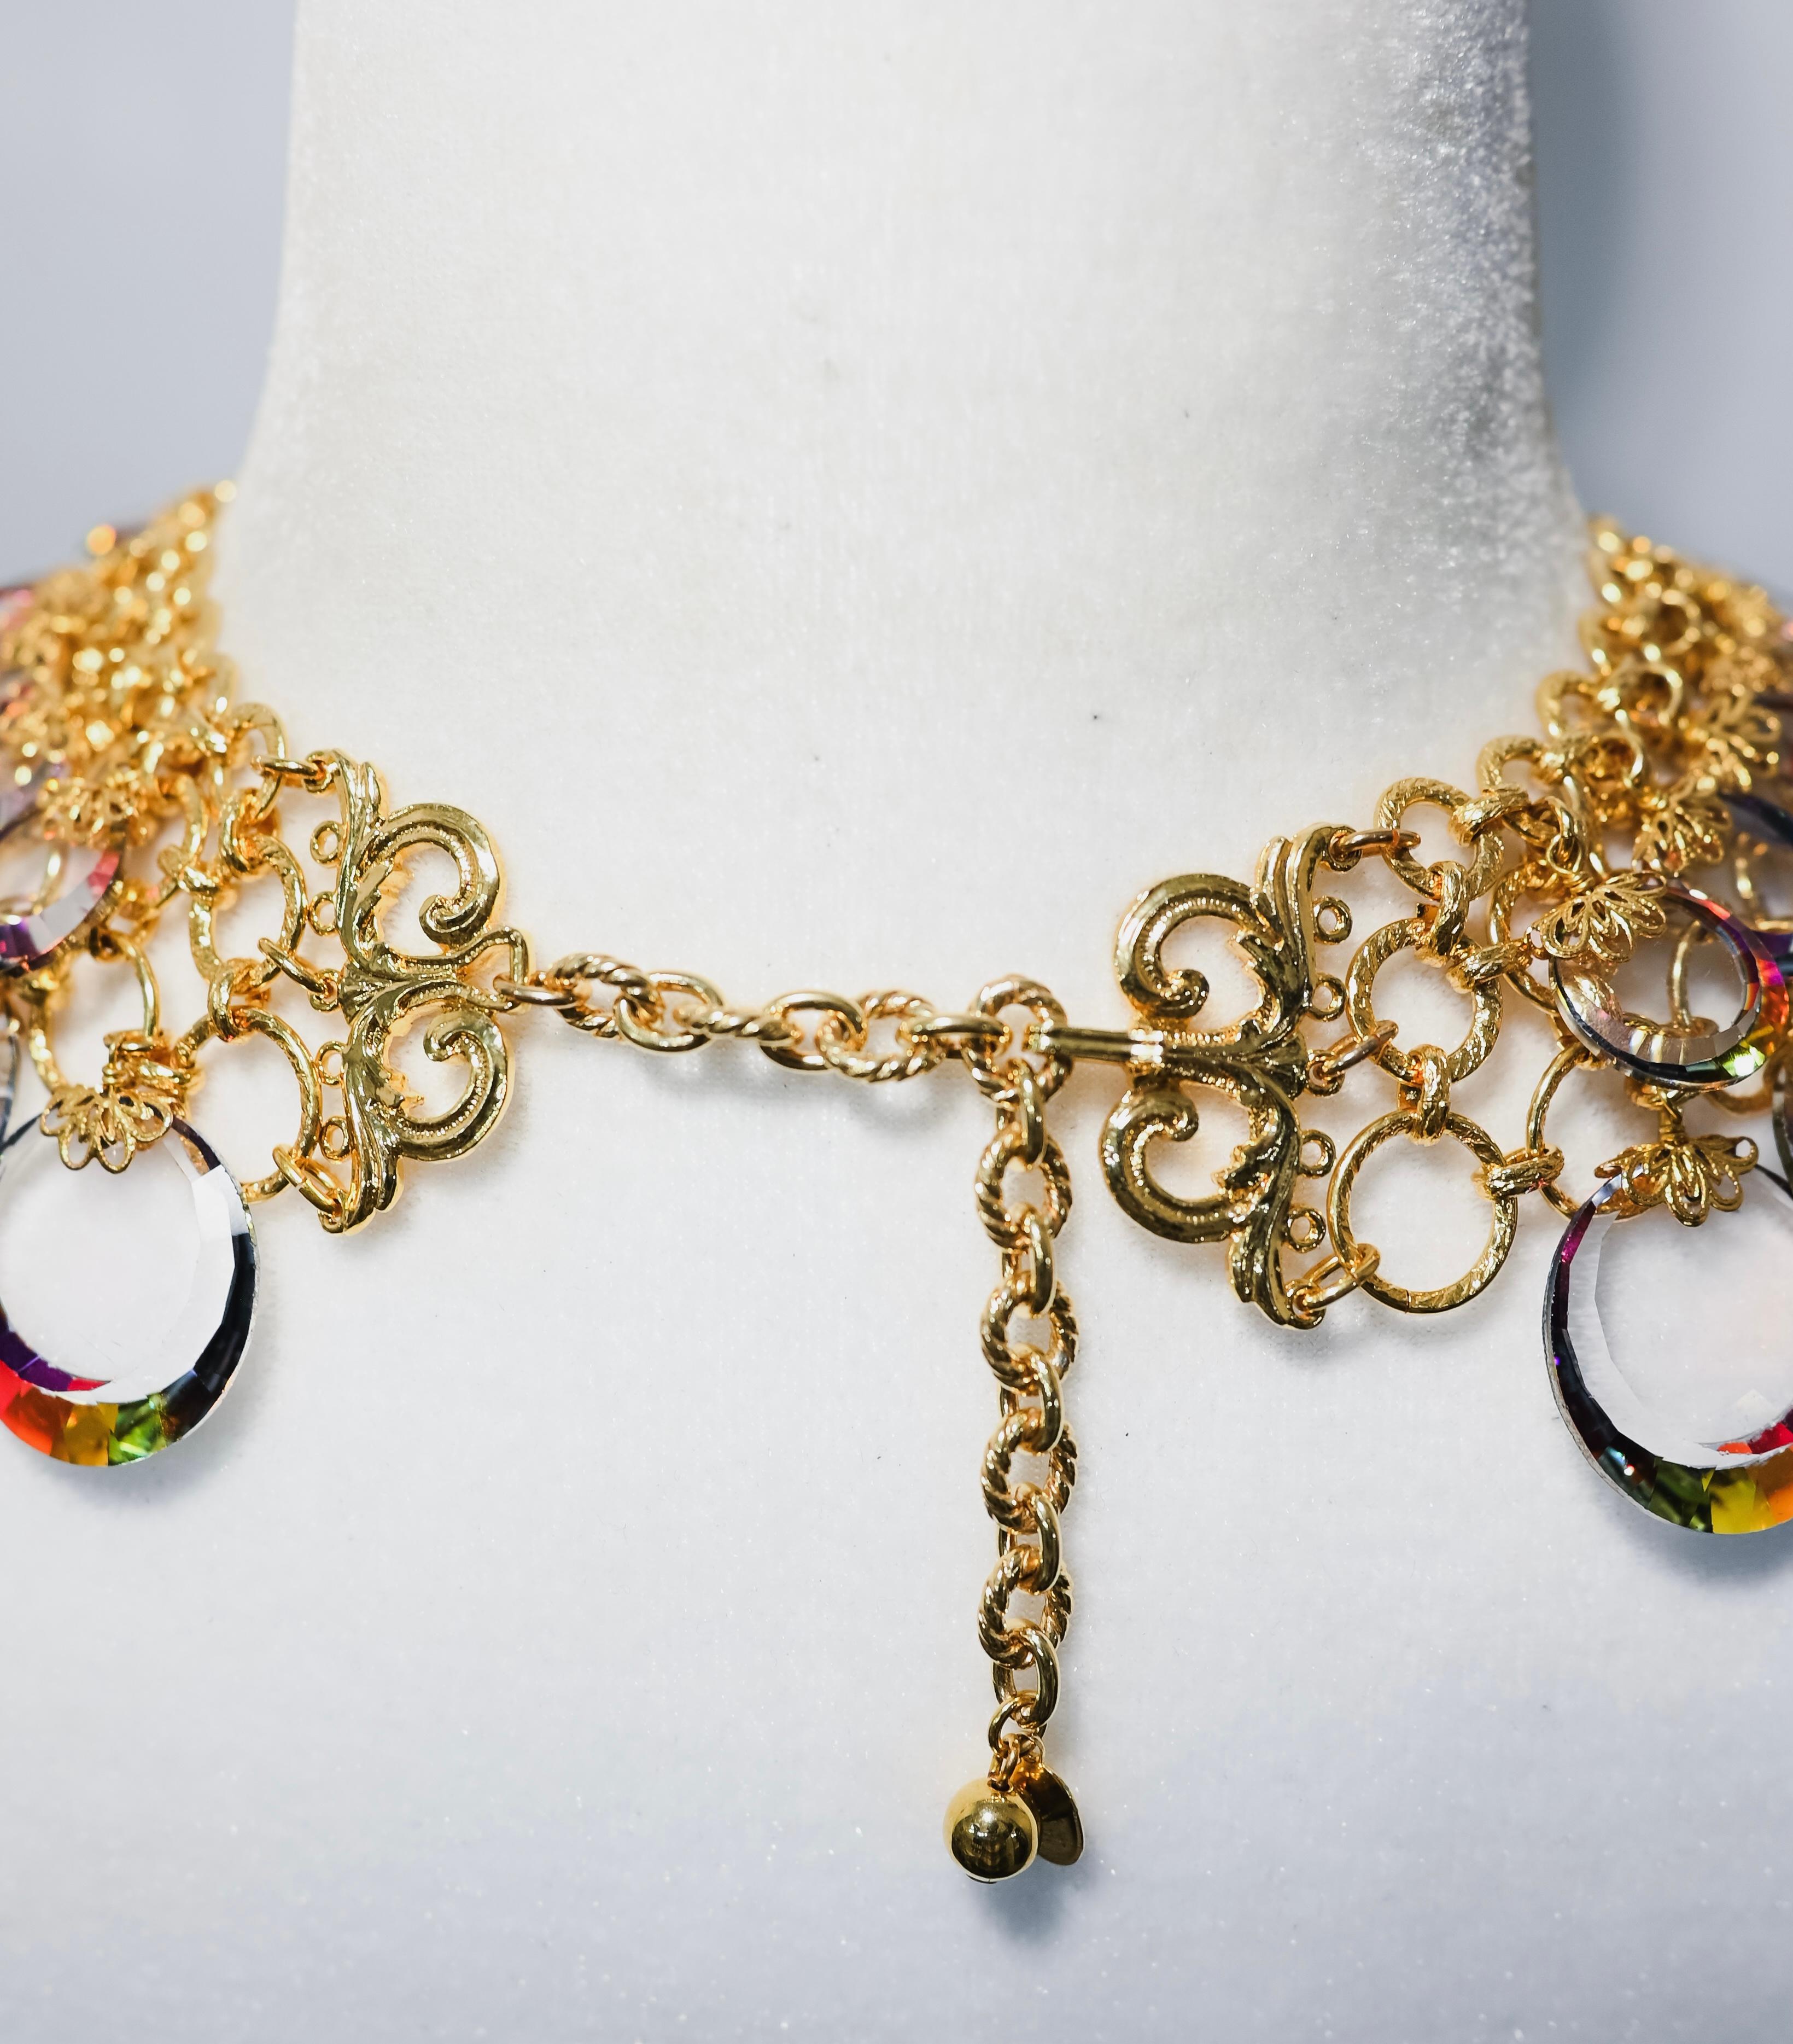 Francoise Montague Iridescent Crillon Necklace In New Condition For Sale In Virginia Beach, VA